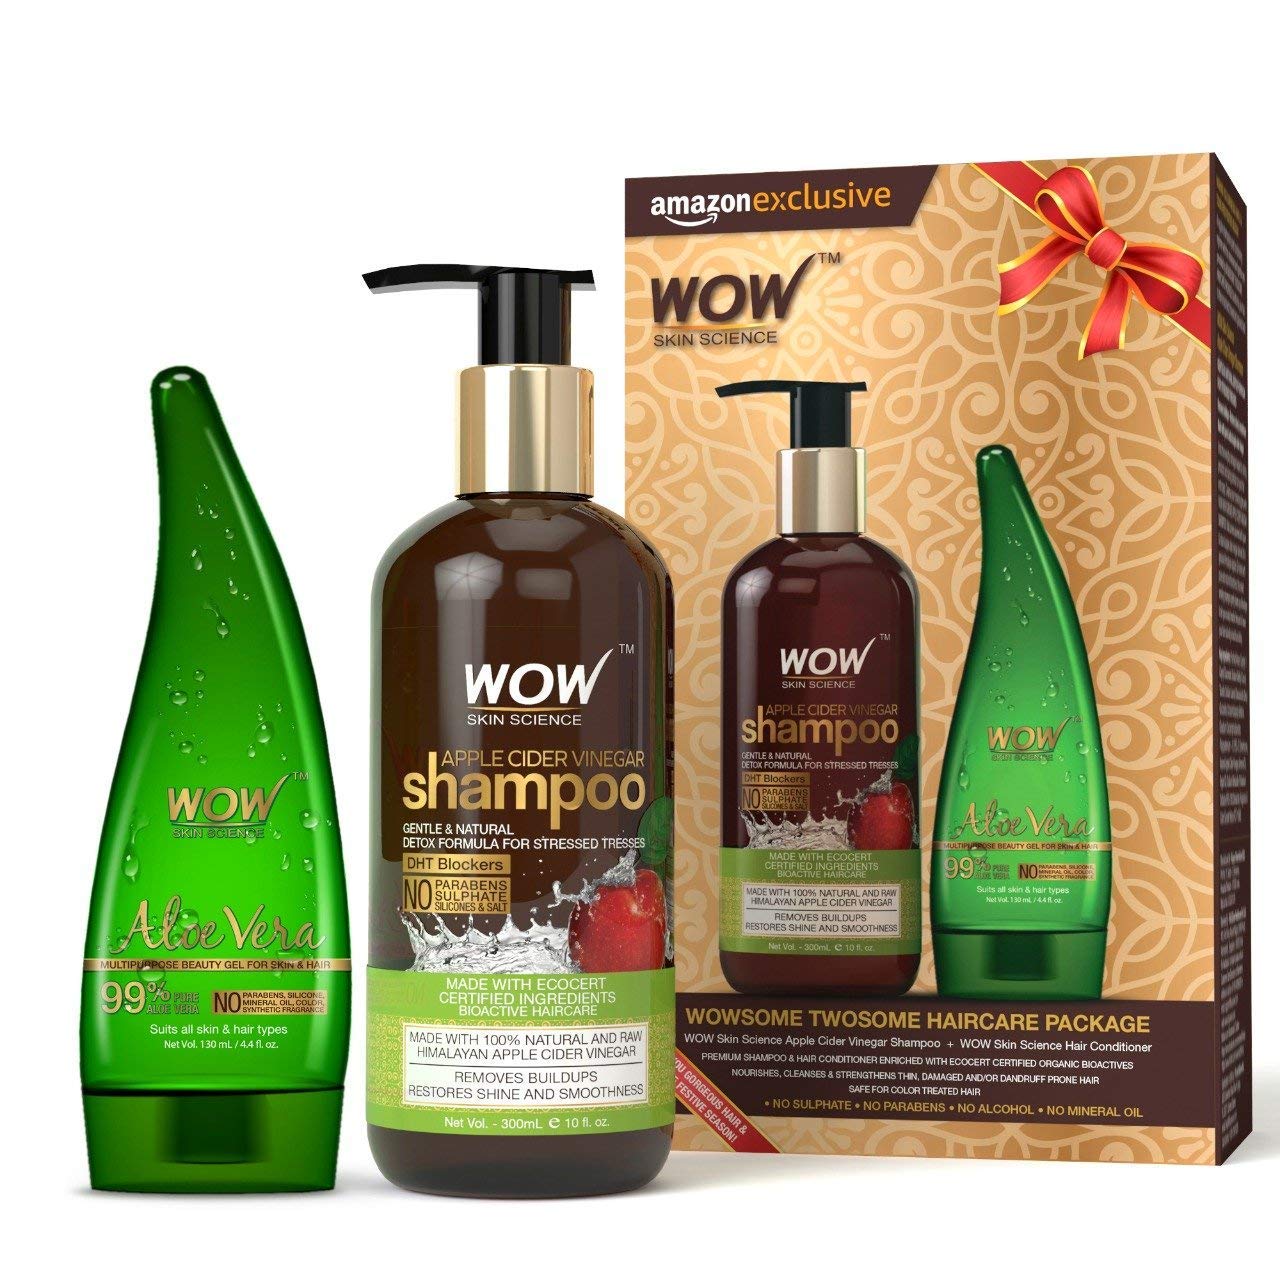 WOW Apple Cider Vinegar Shampoo with WOW 99% Pure Aloe Vera Gel Combo Kit